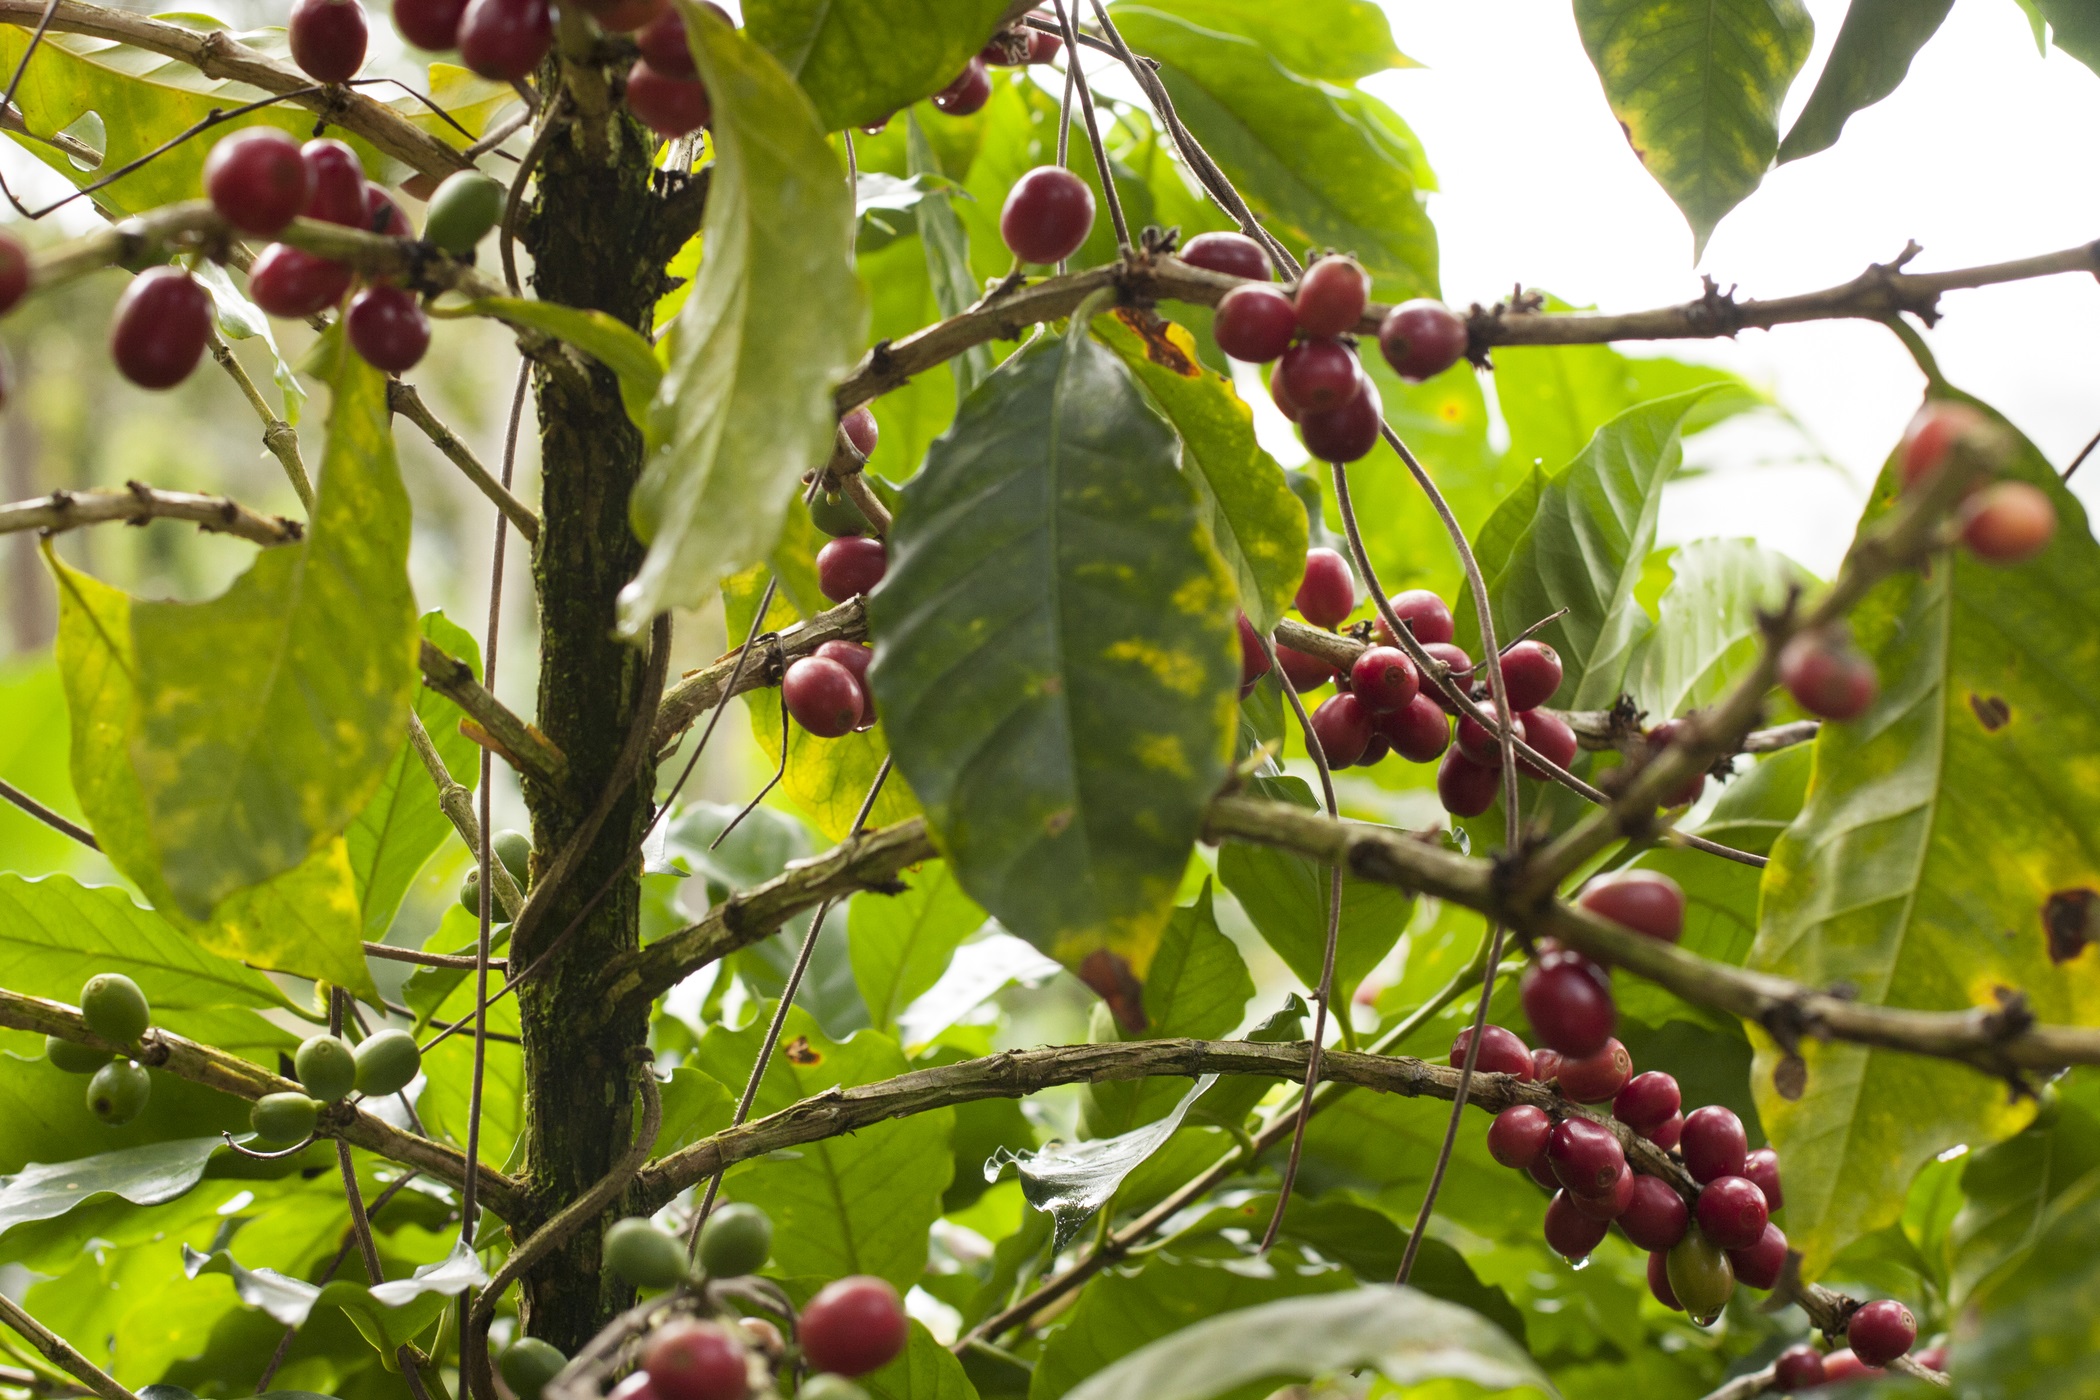 Cherries grown on an organic coffee plant